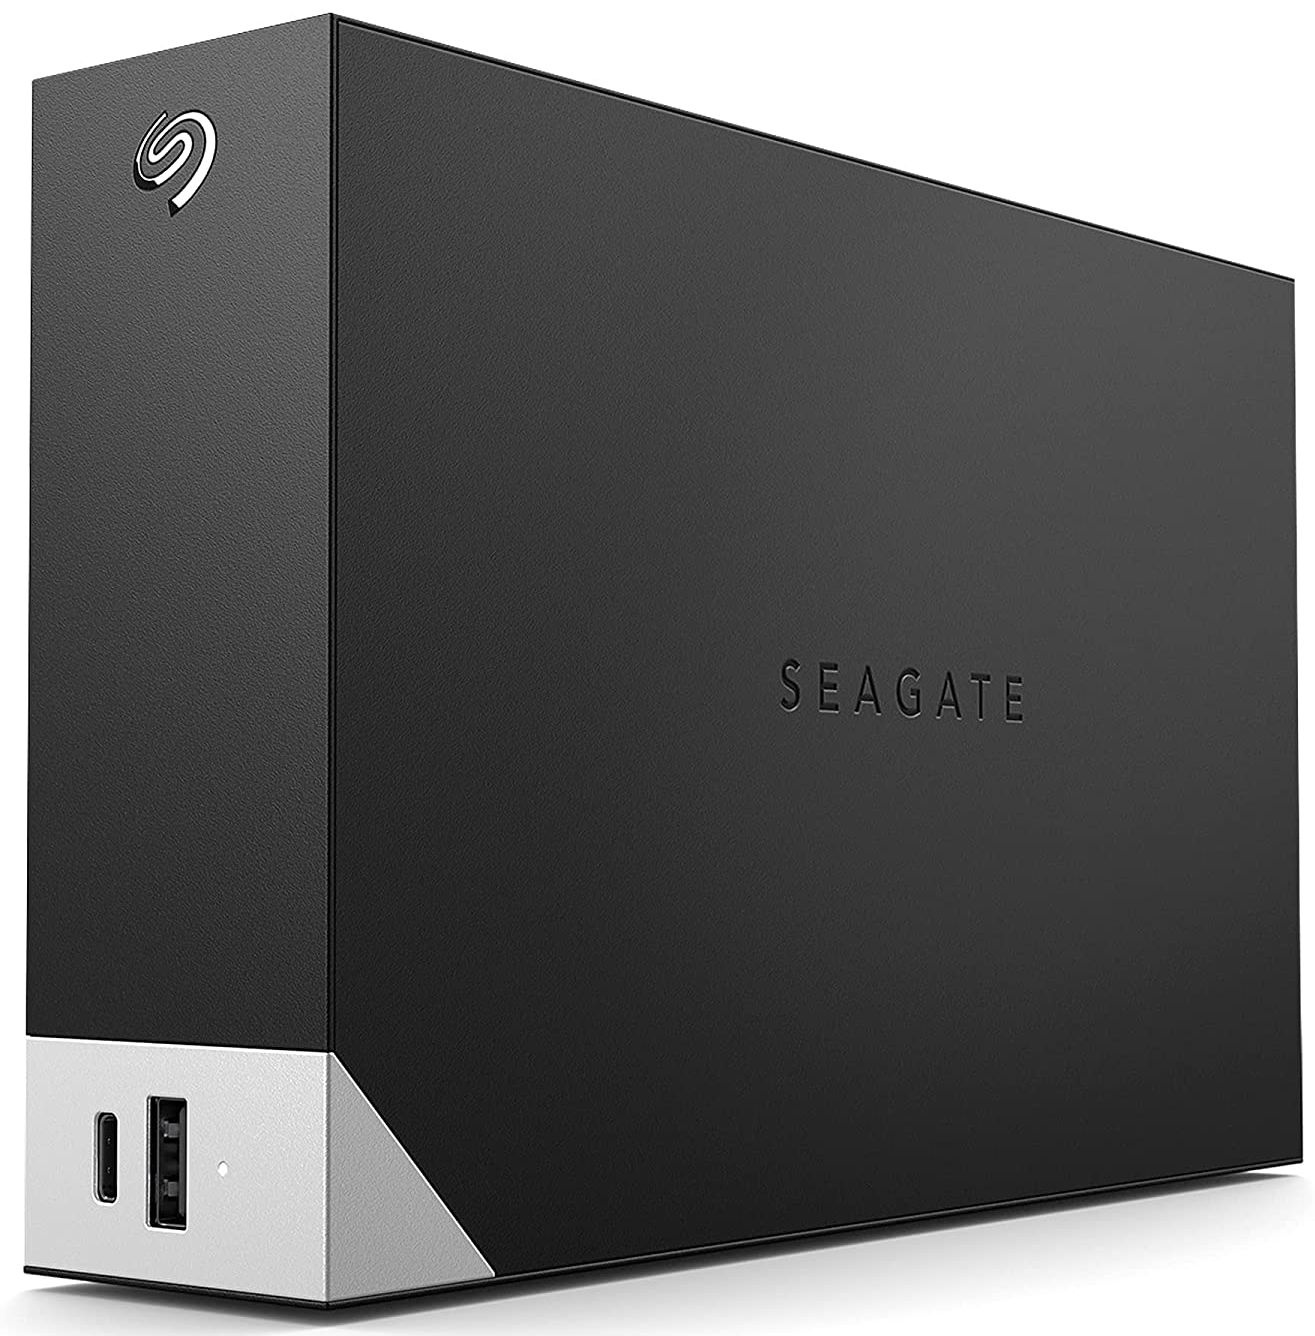 Жесткий диск Seagate USB 3.0 8TB STLC8000400 One Touch 3.5" черный USB 3.0 type C